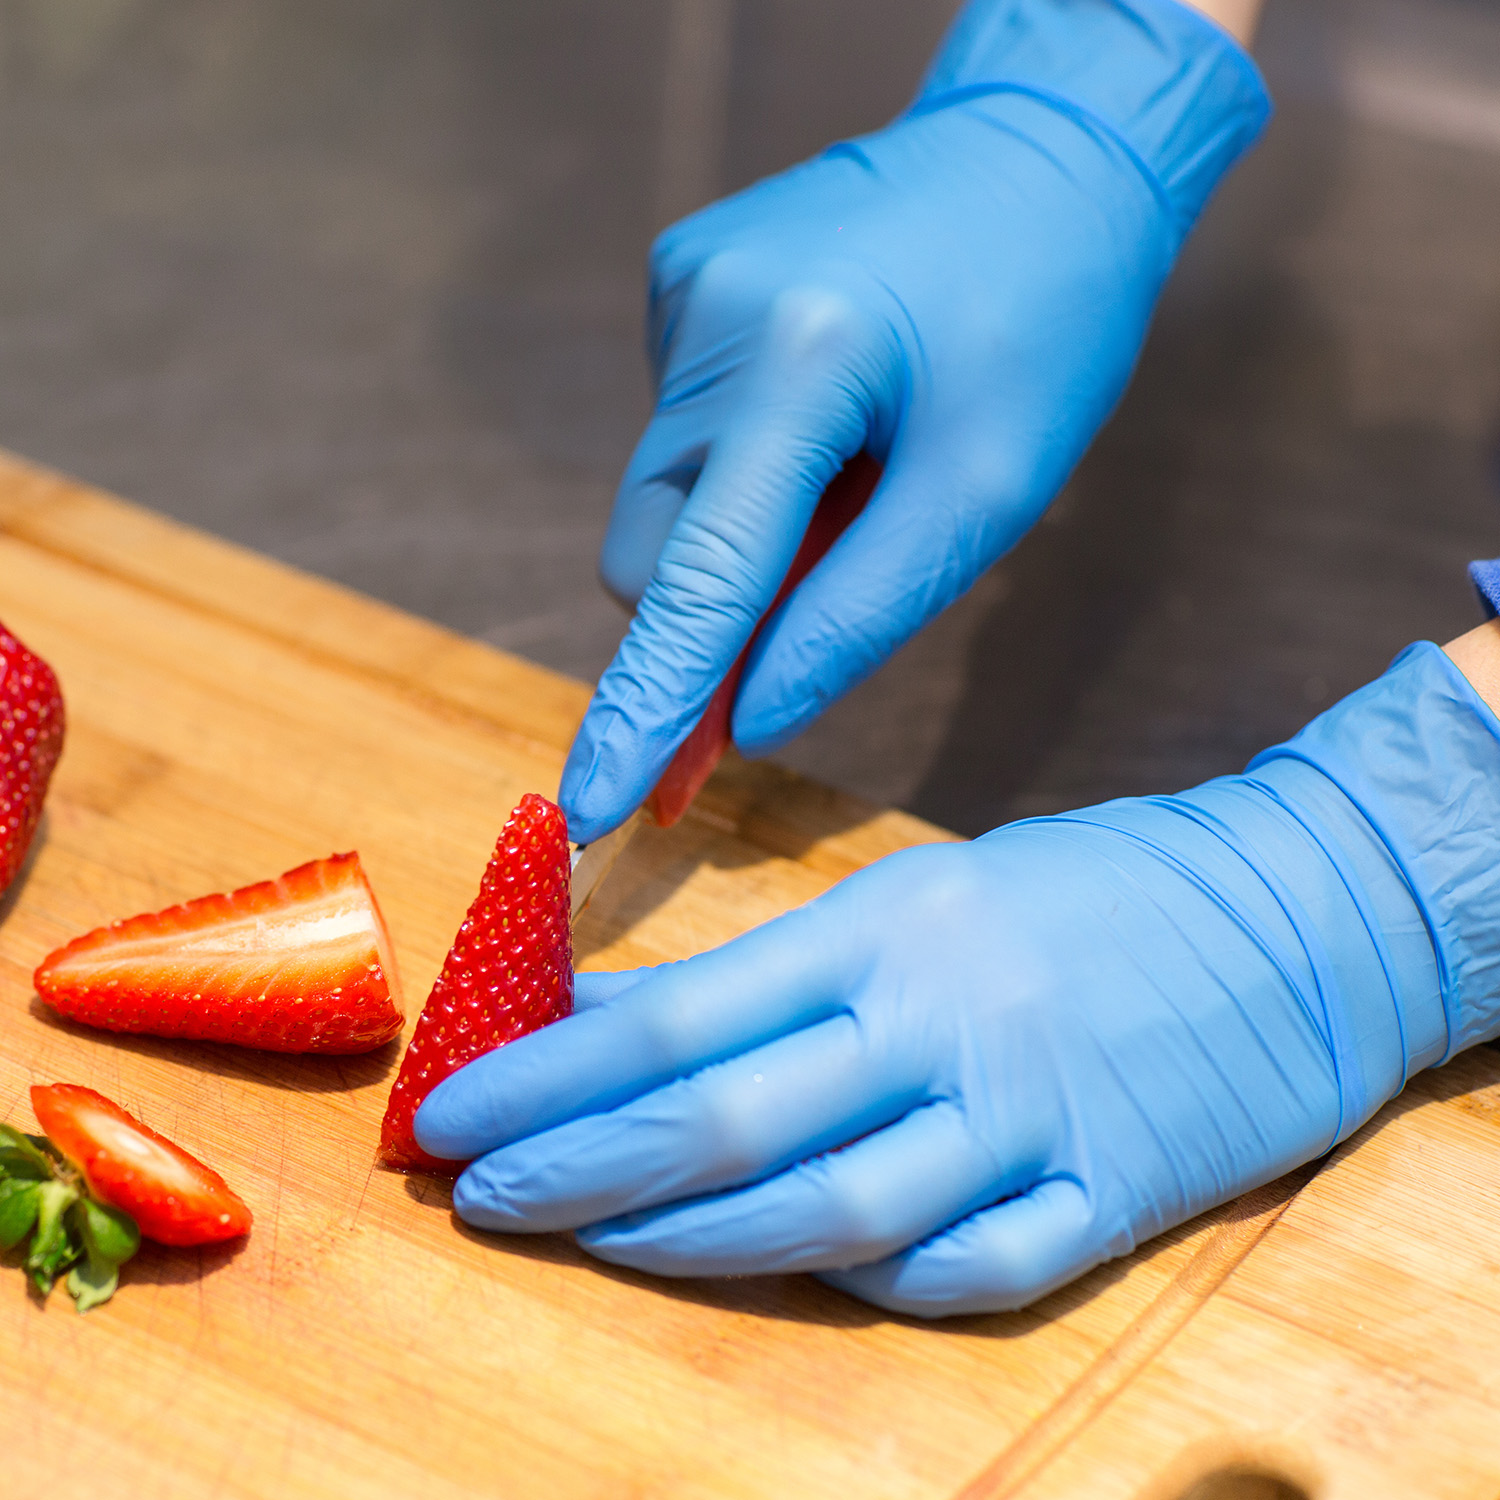 Gloved hands cutting strawberries.